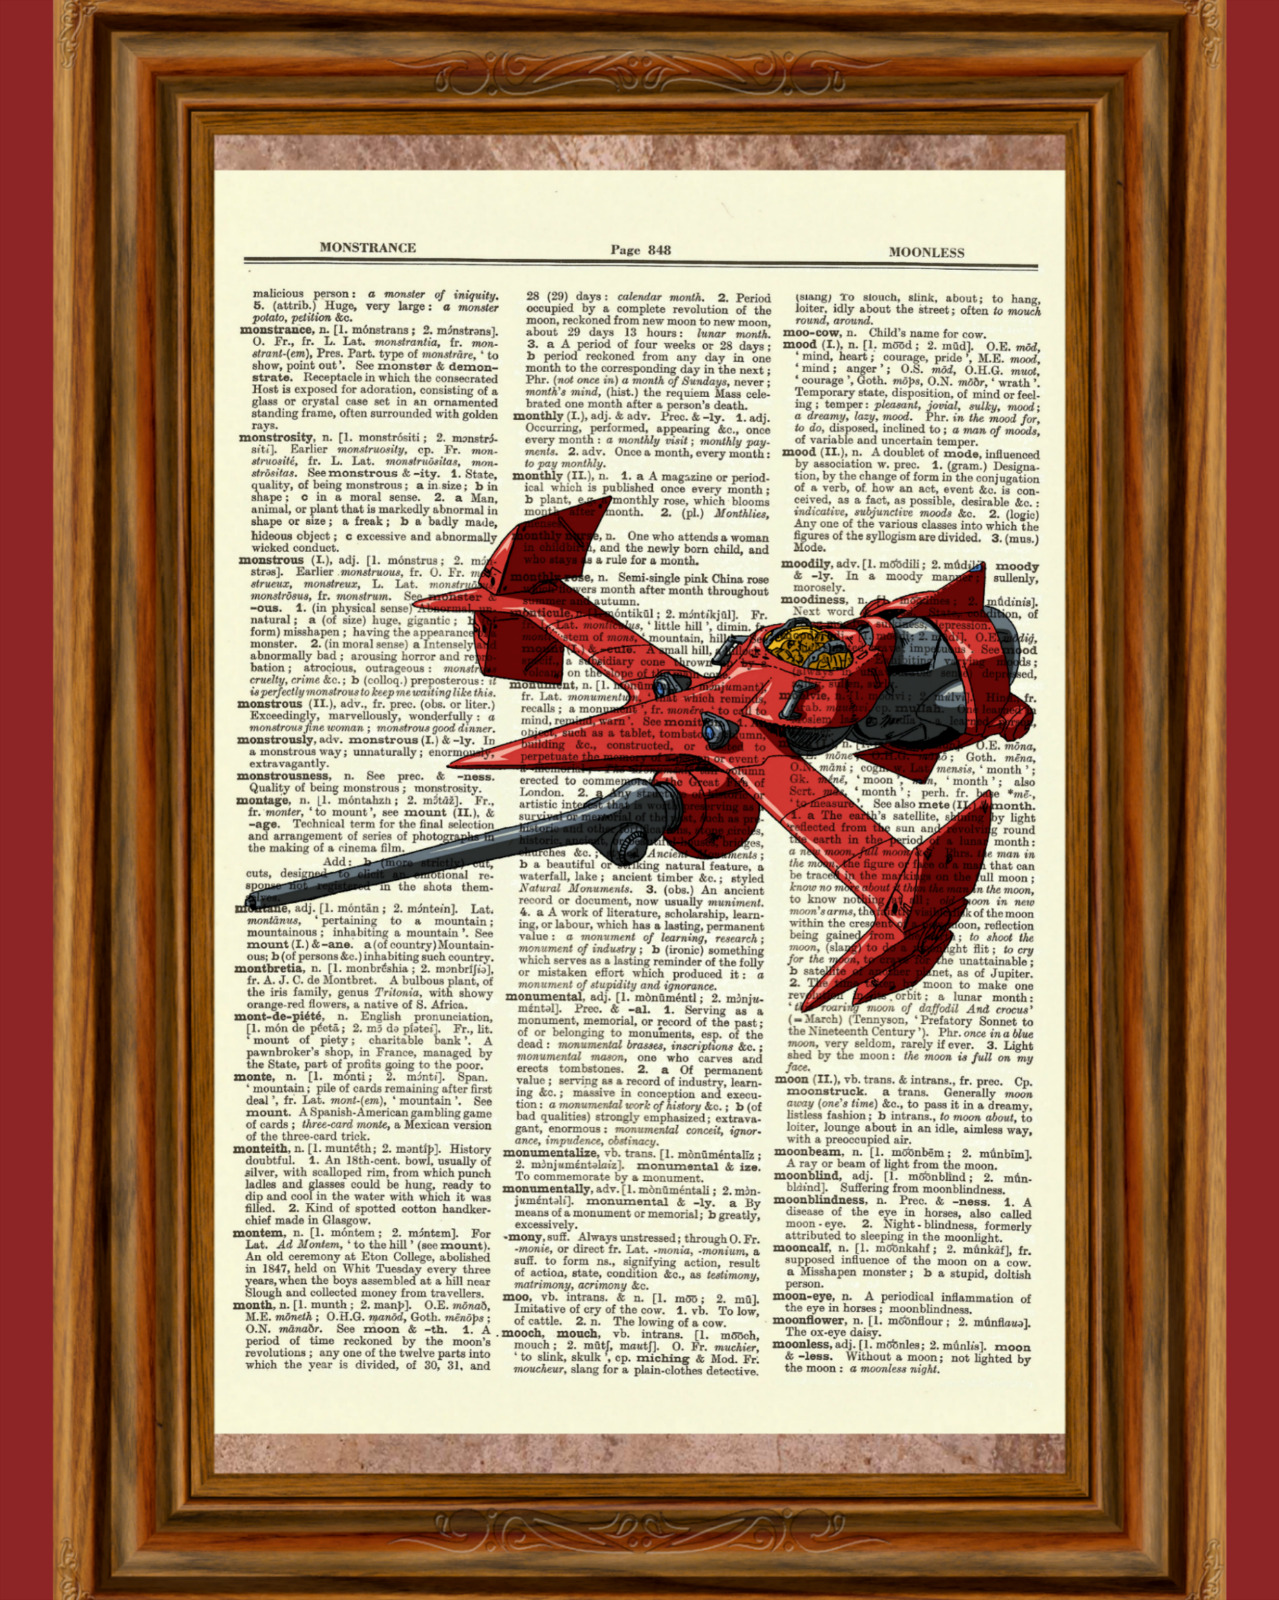 Swordfish Cowboy Bebop Anime Dictionary Art Print Poster Picture Spike Spiegel